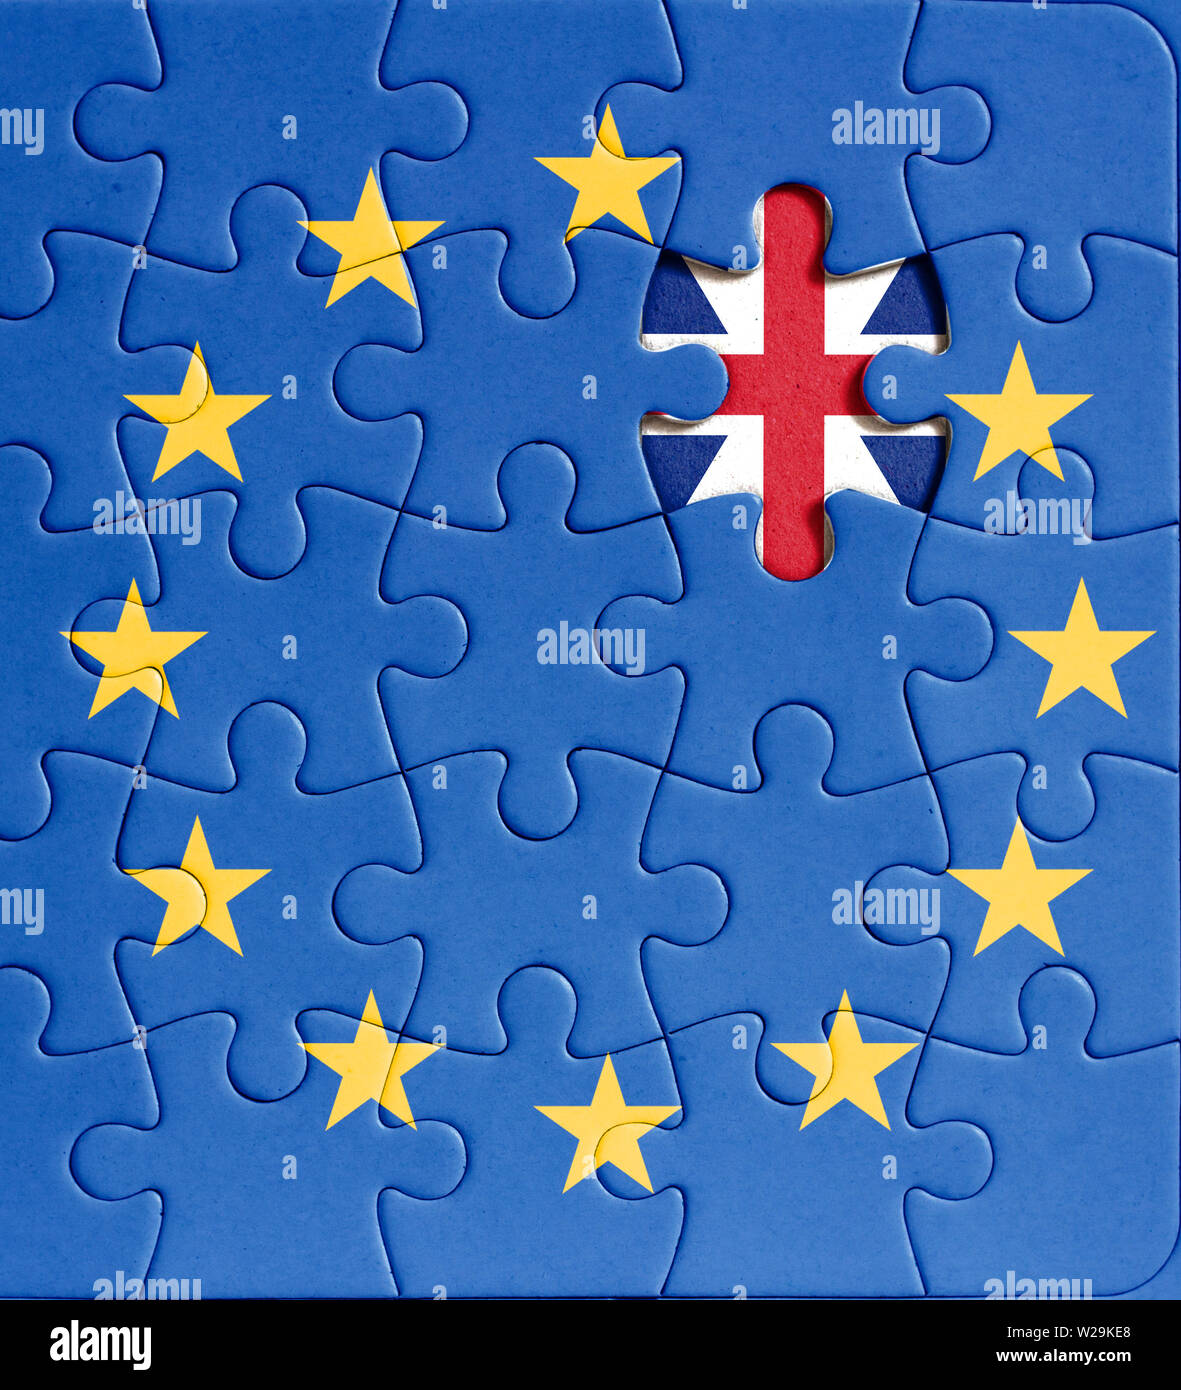 brexit puzzle. european union flag with missing Grat Britain star Stock Photo